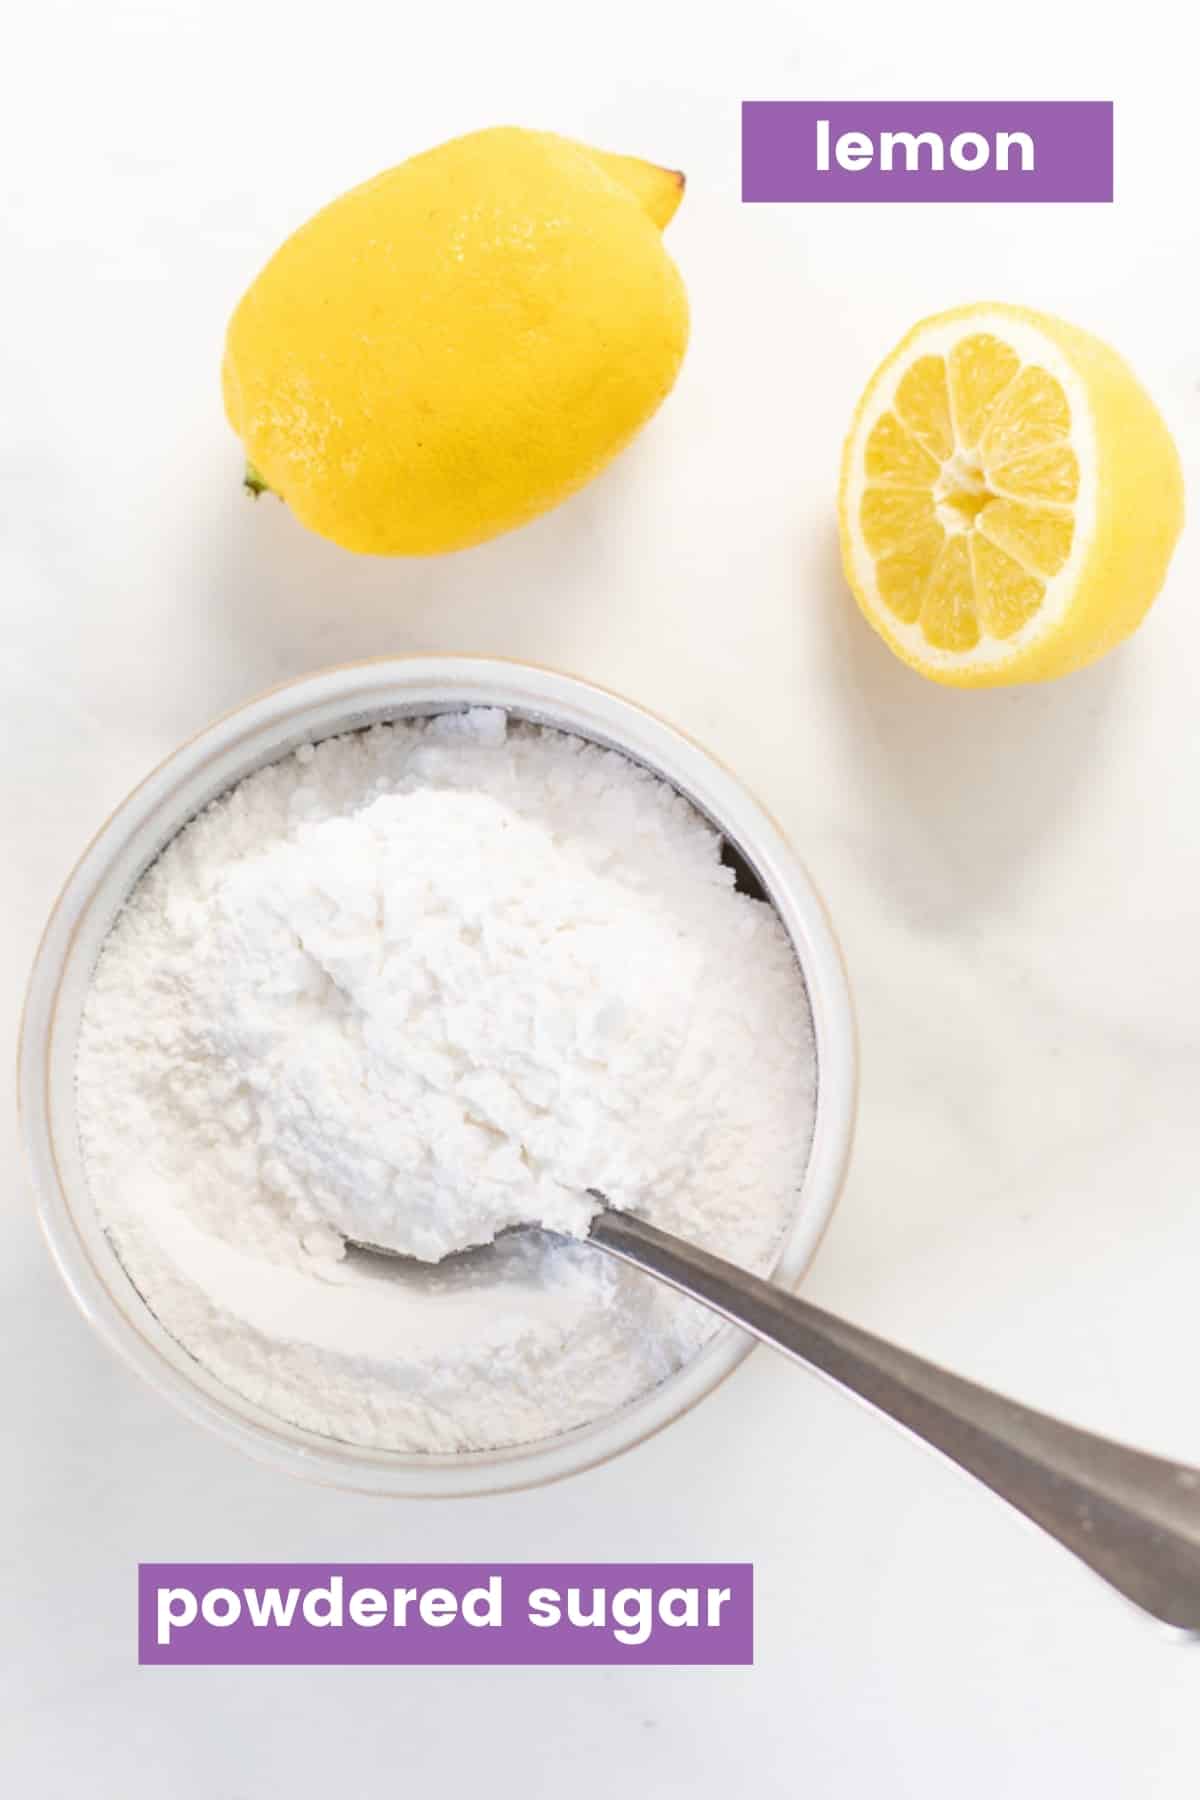 ingredients for lemon glaze ass per written list 